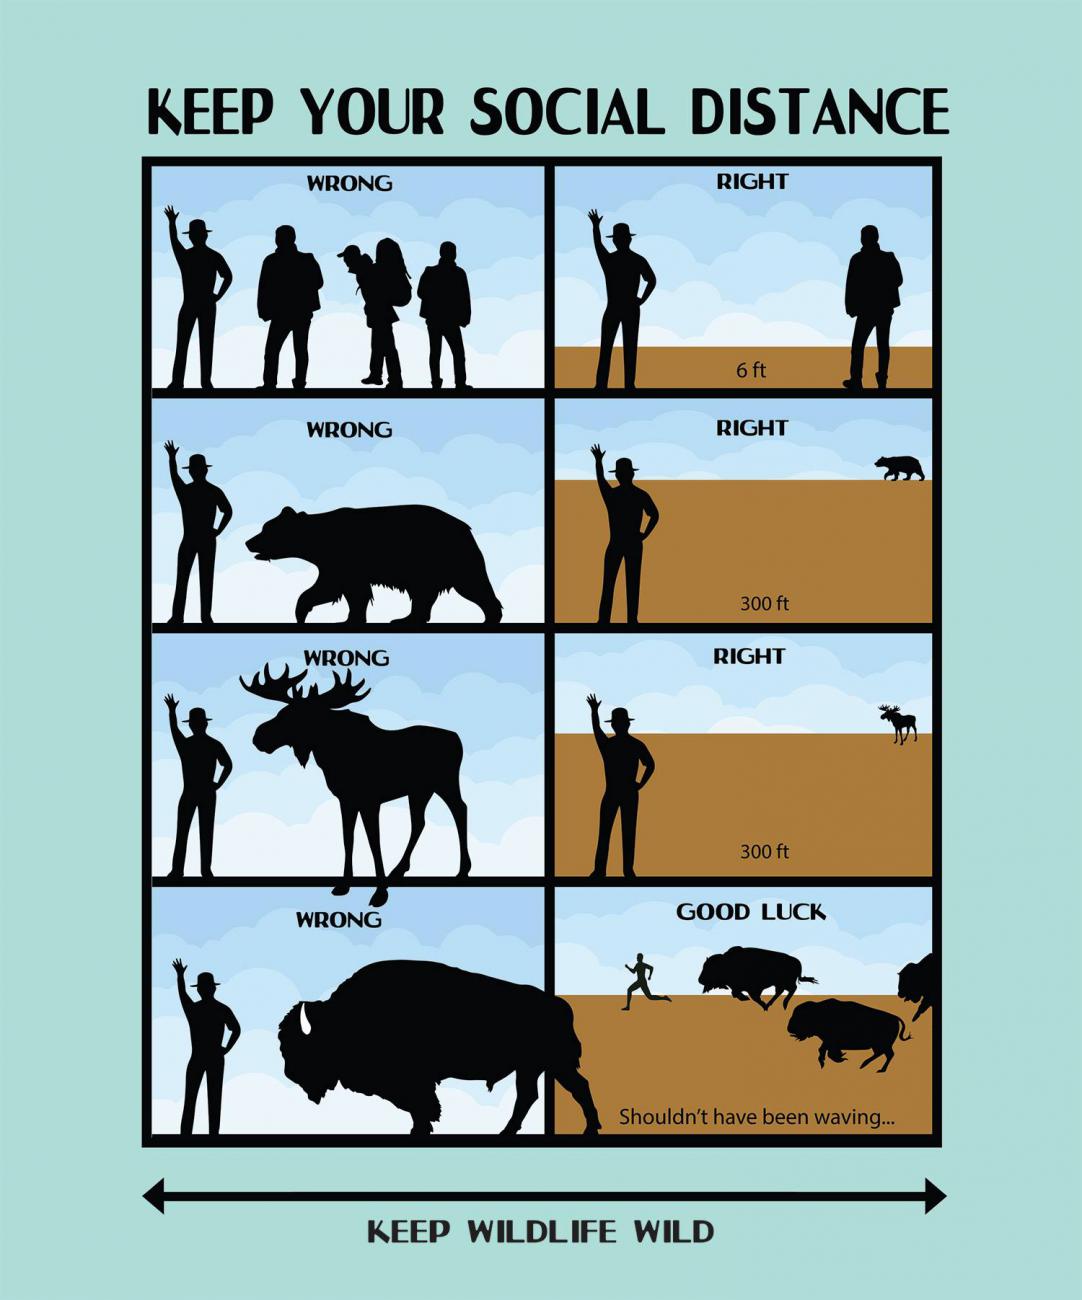 Social Distancing Guide